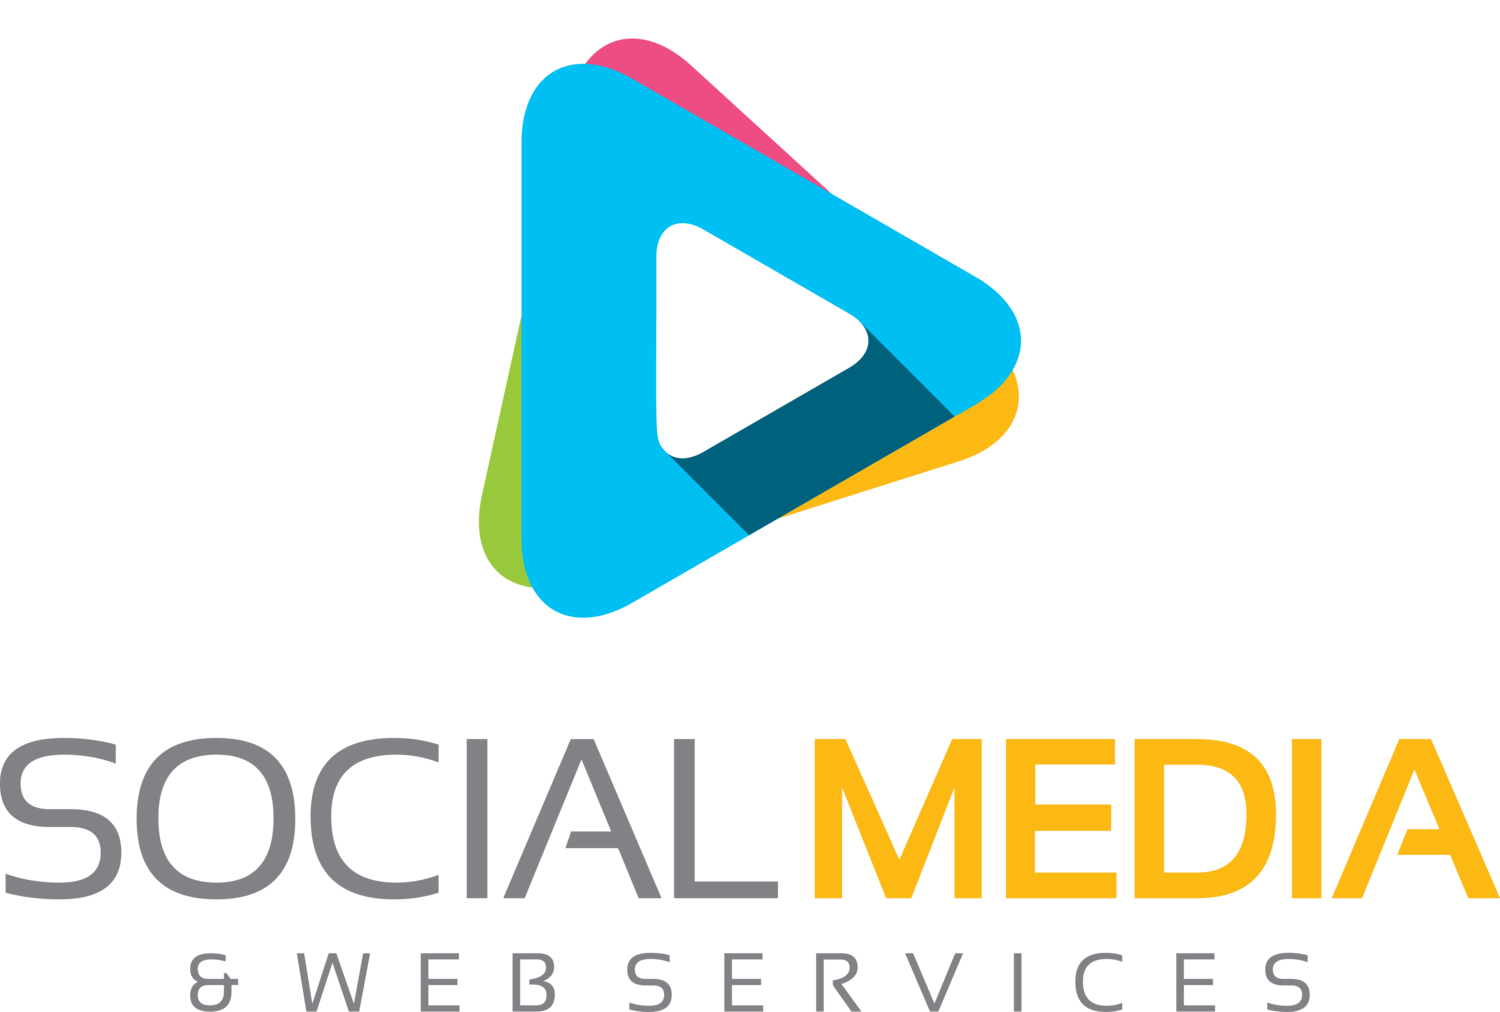 Social Media & Web Services